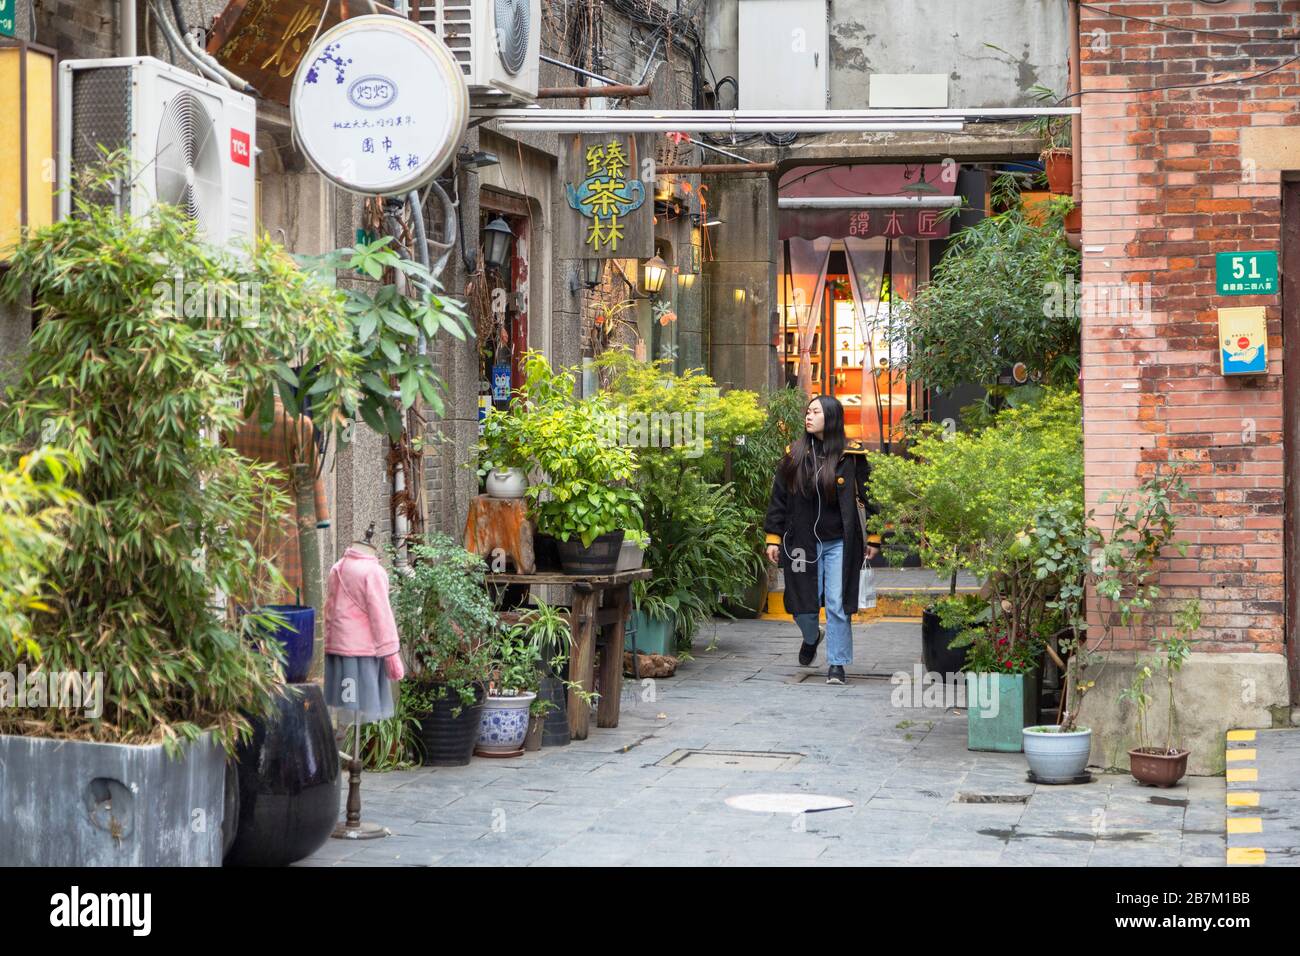 Woman walking around alleyways of Tianzifang, Shanghai, China Stock Photo